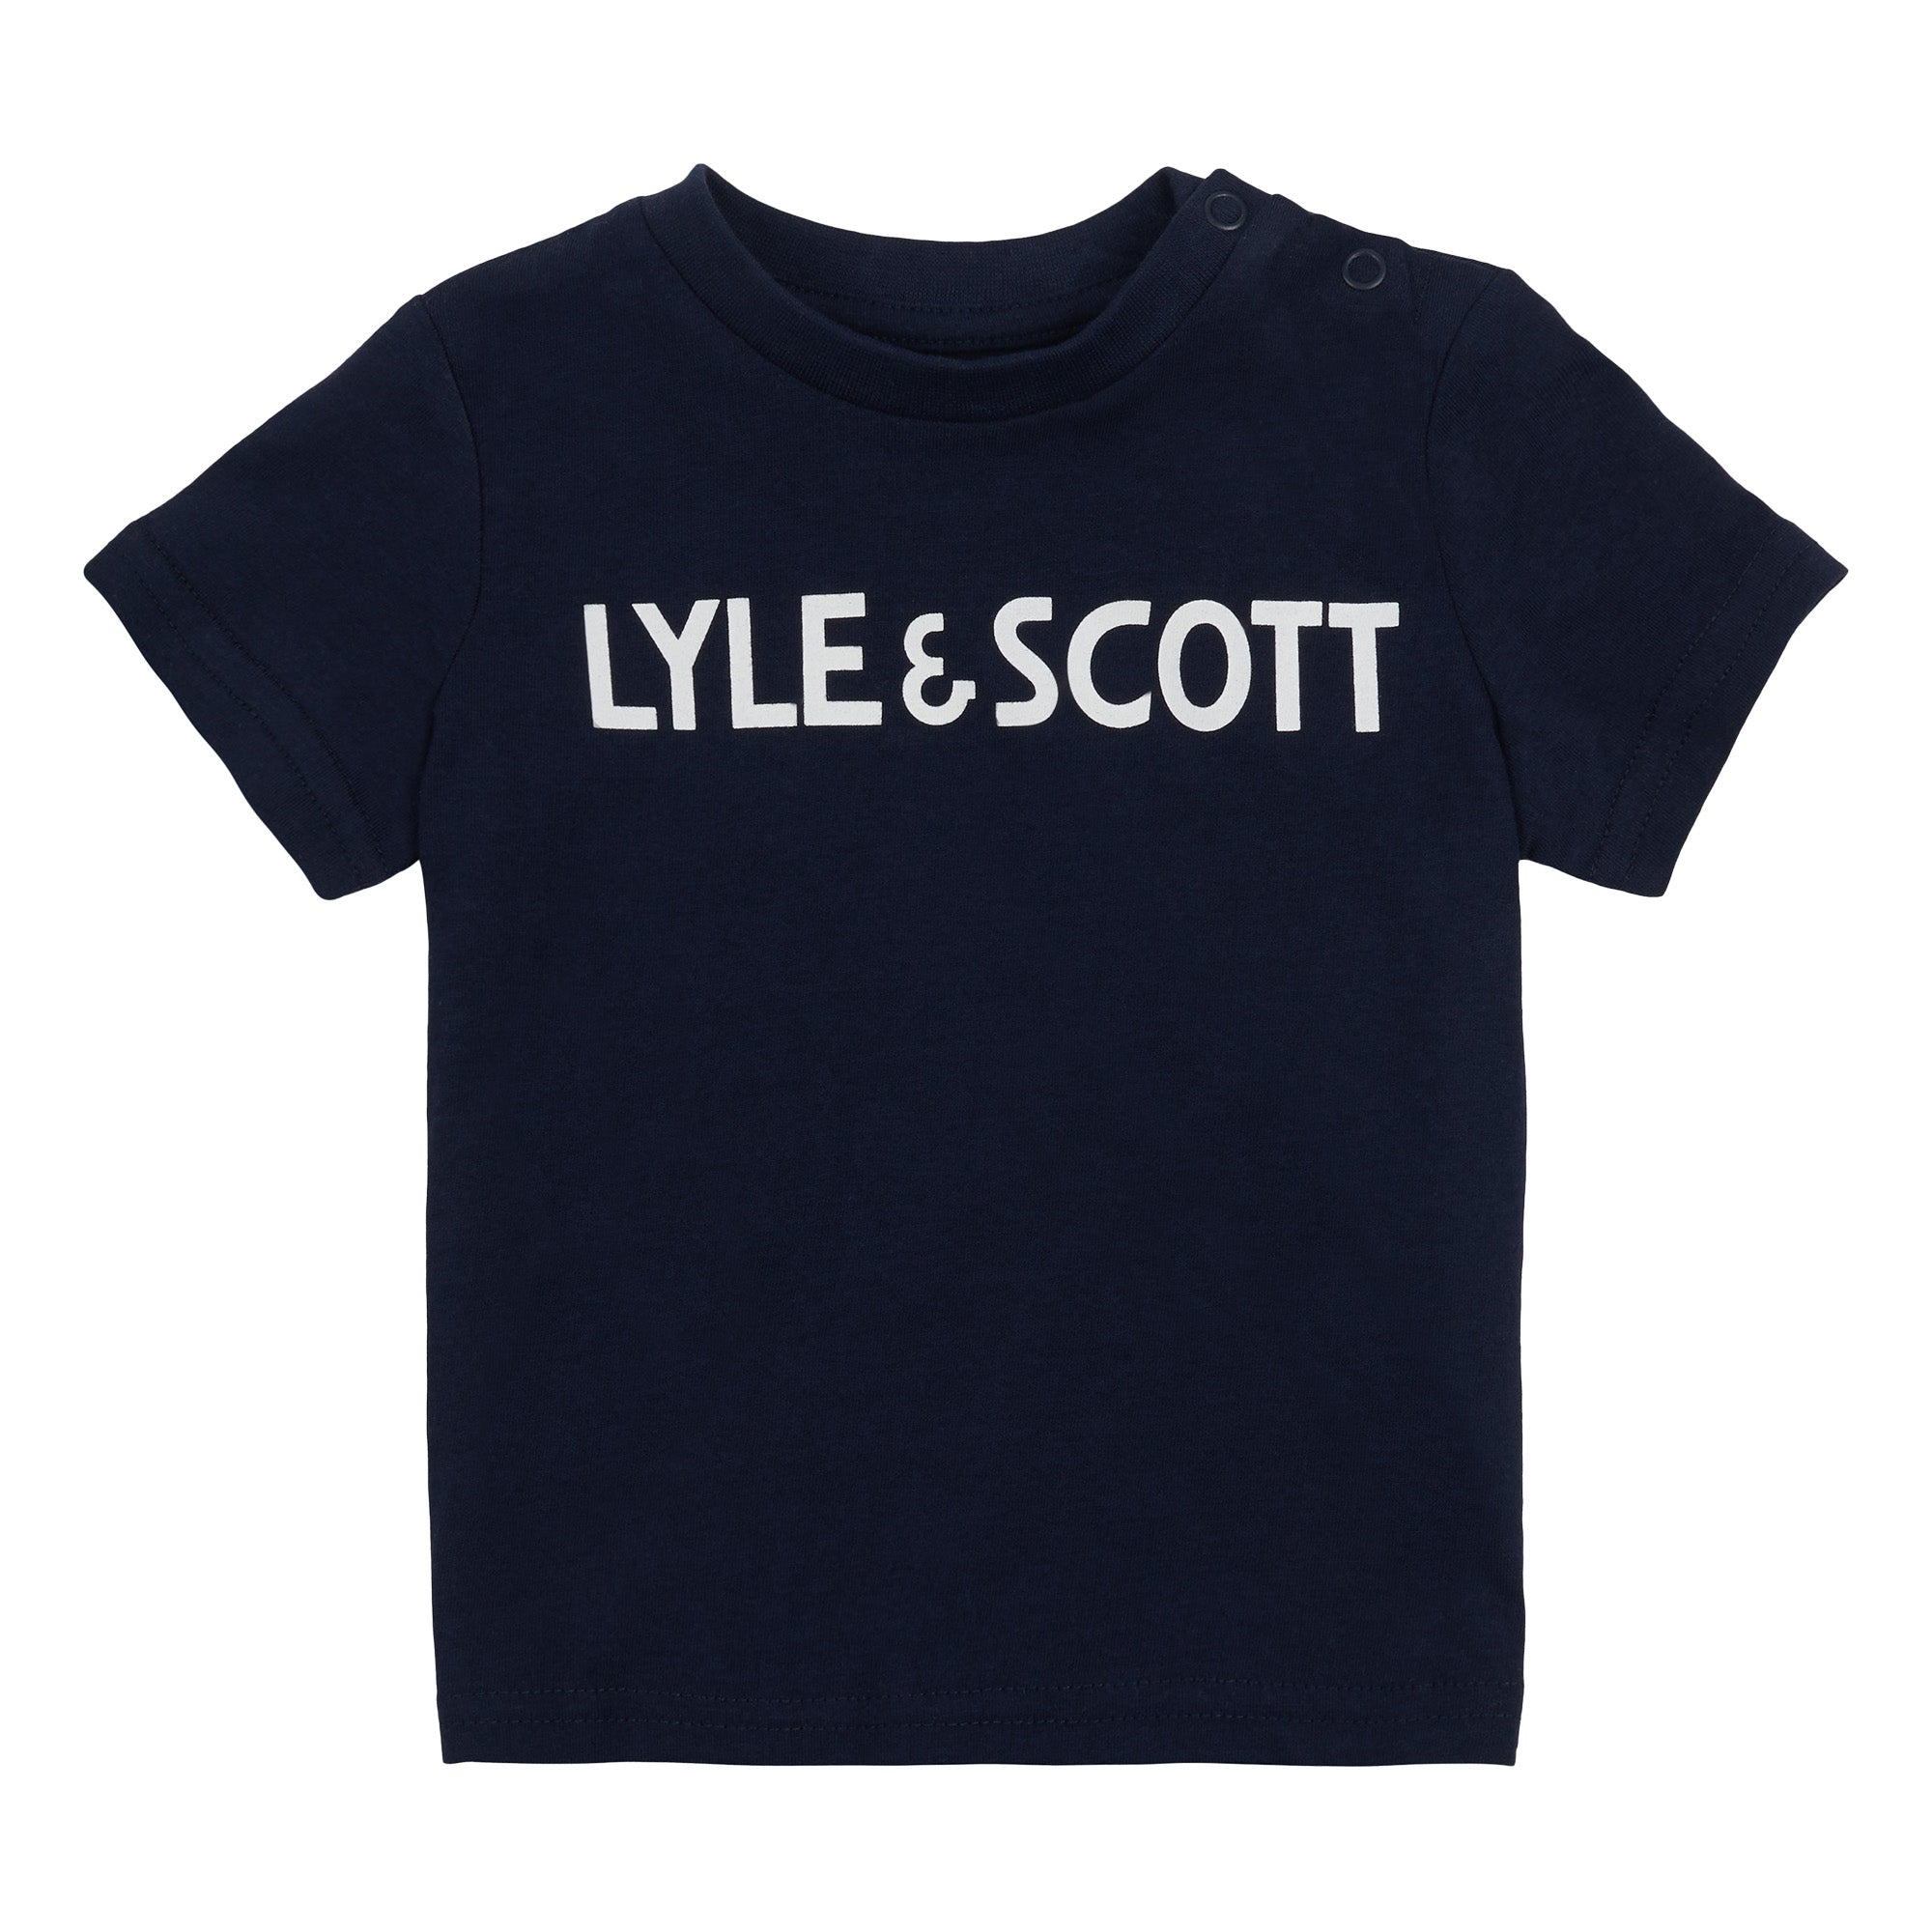 Lyle & Scott Lyle 2 Pair SS Tee